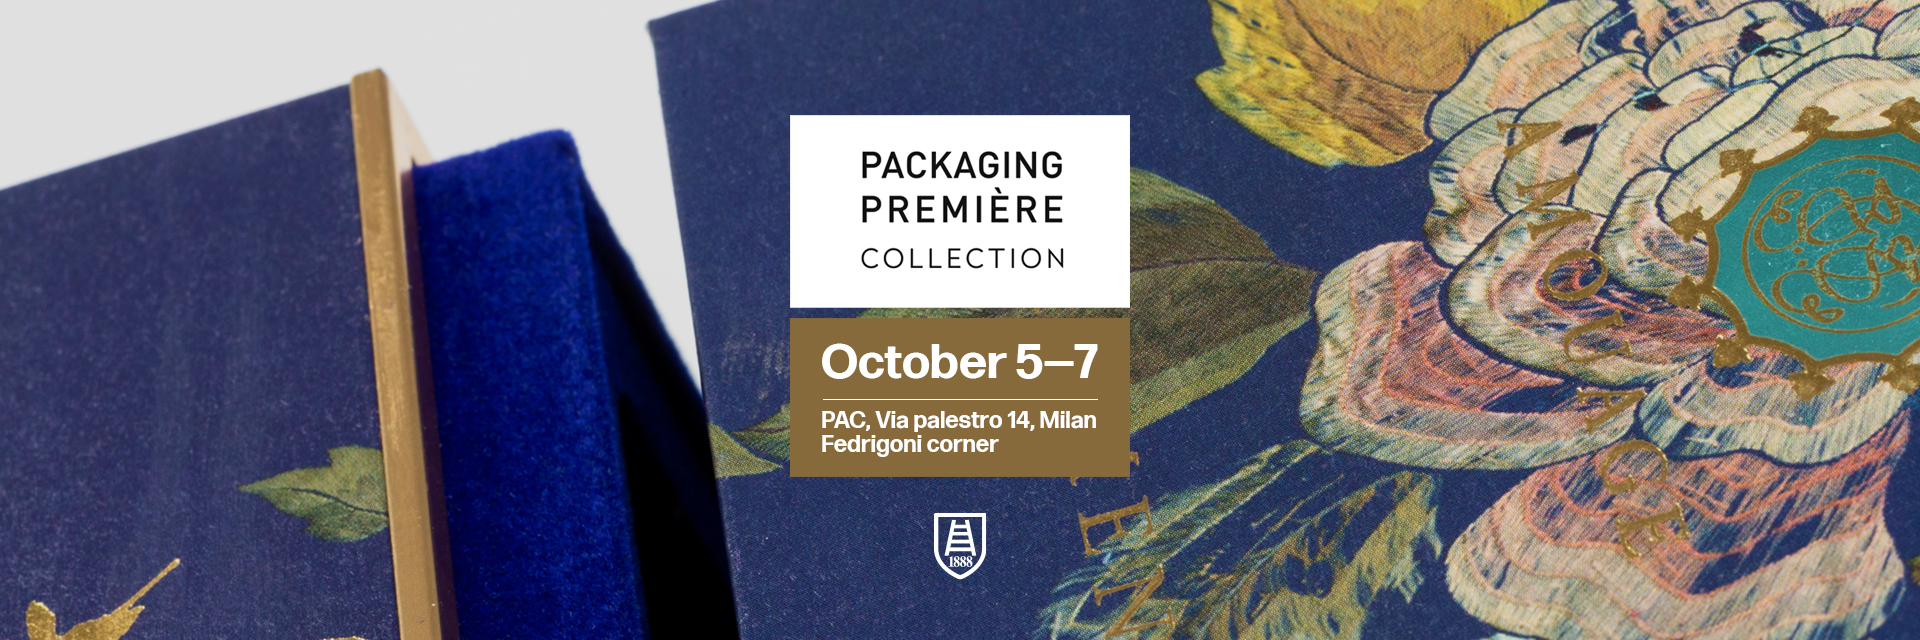 Vieni a vederci al Packaging Premiere Collection